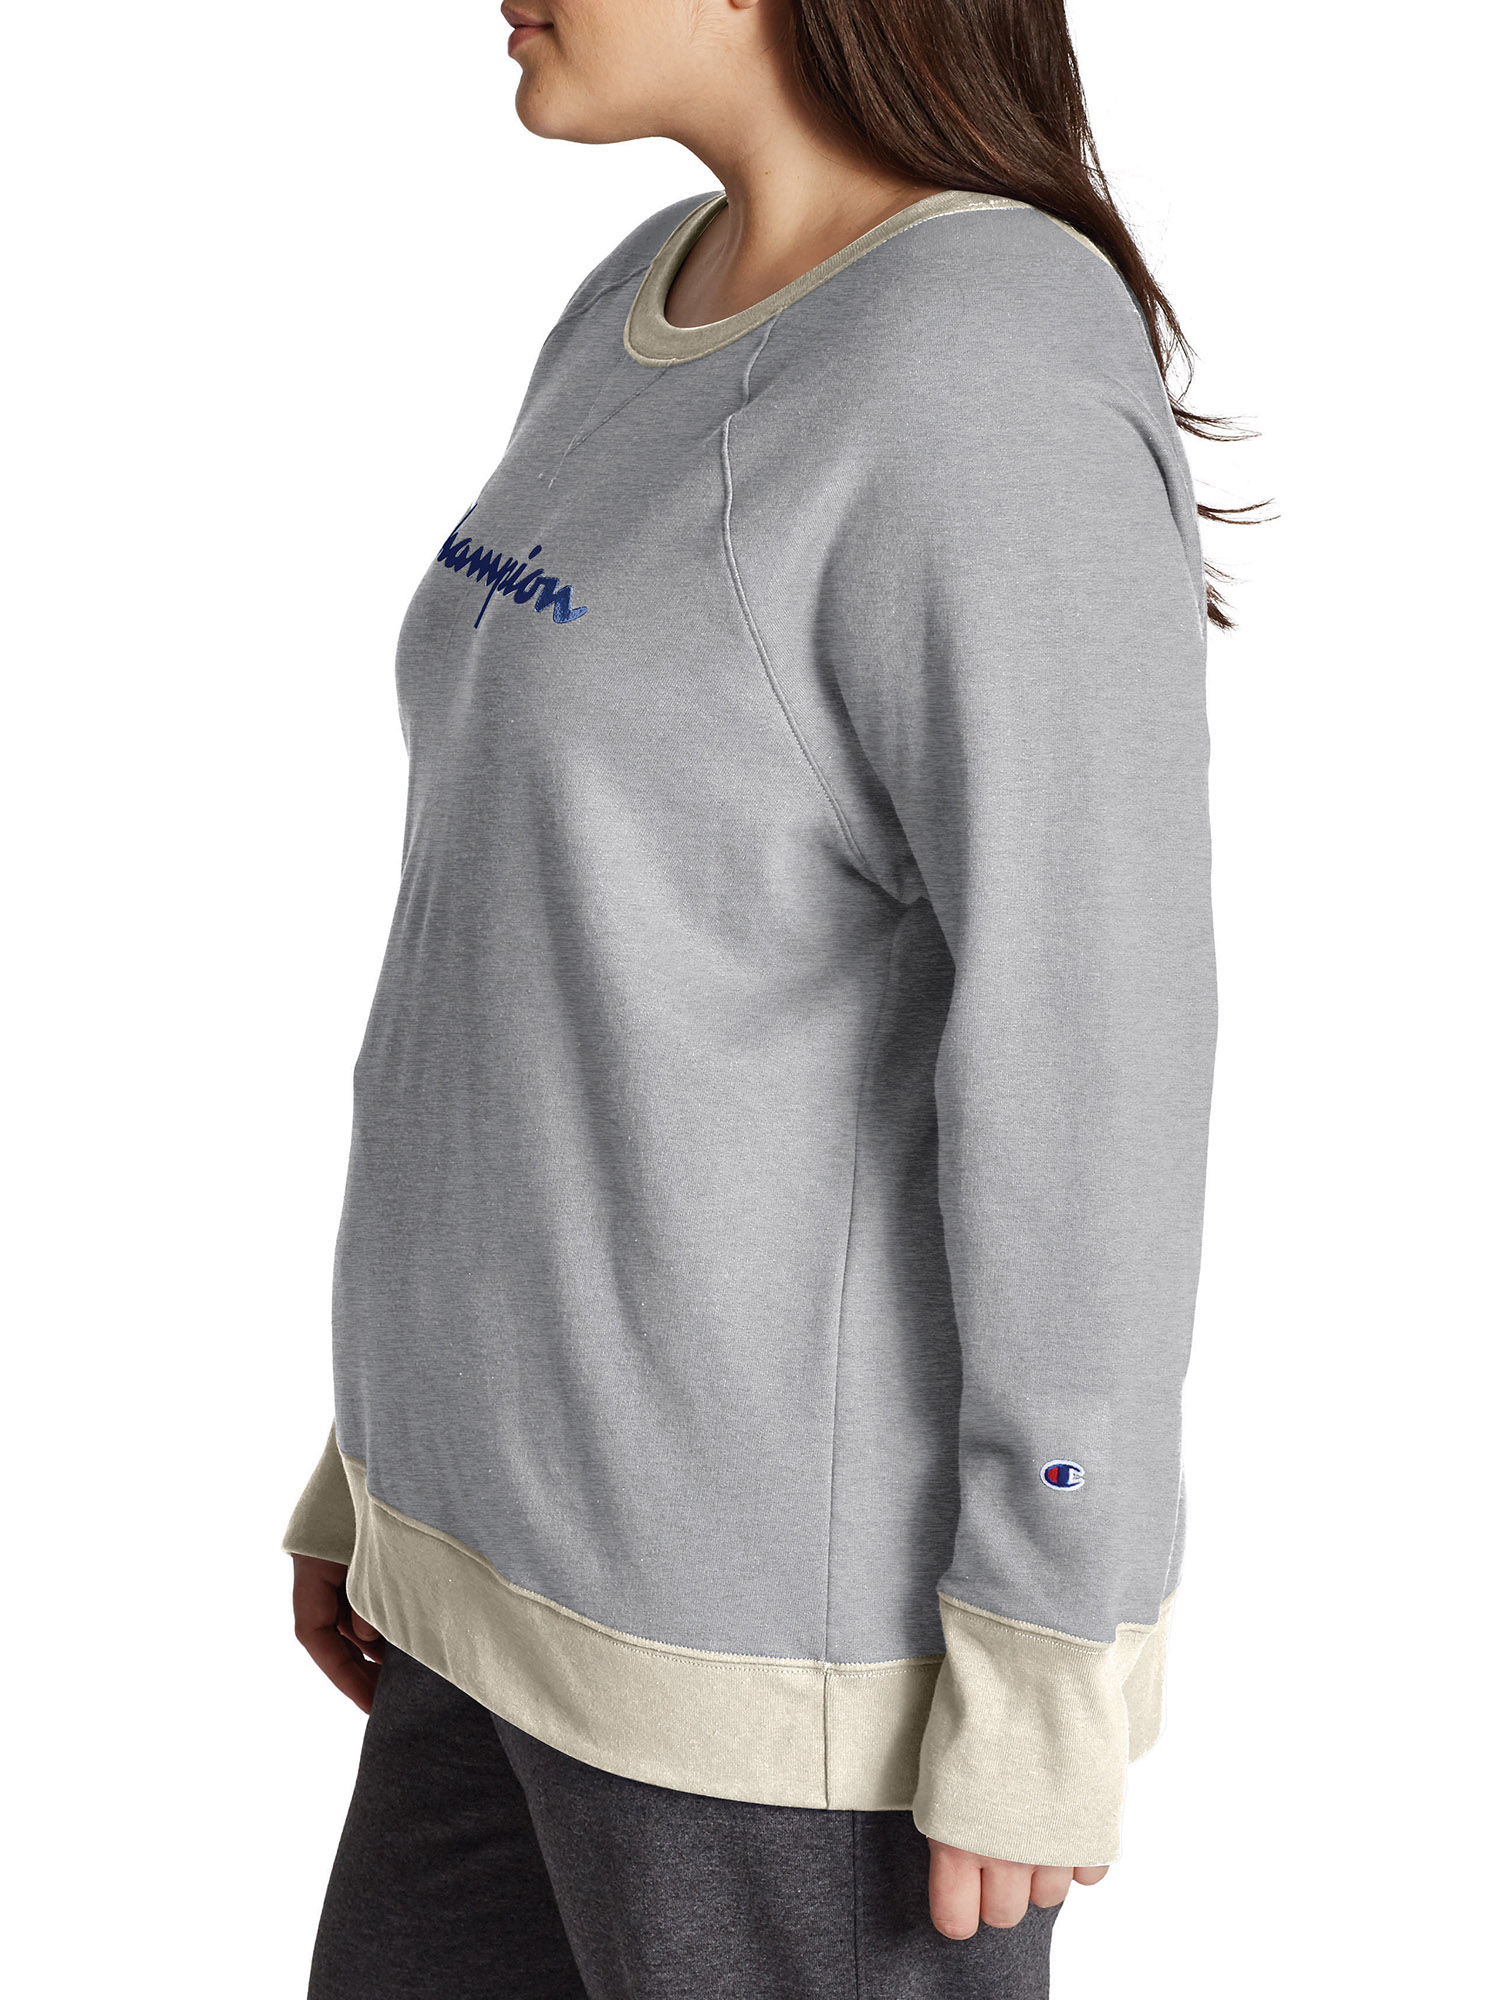 Champion Women's Plus Size Powerblend Graphic Crewneck Sweatshirt - image 3 of 6